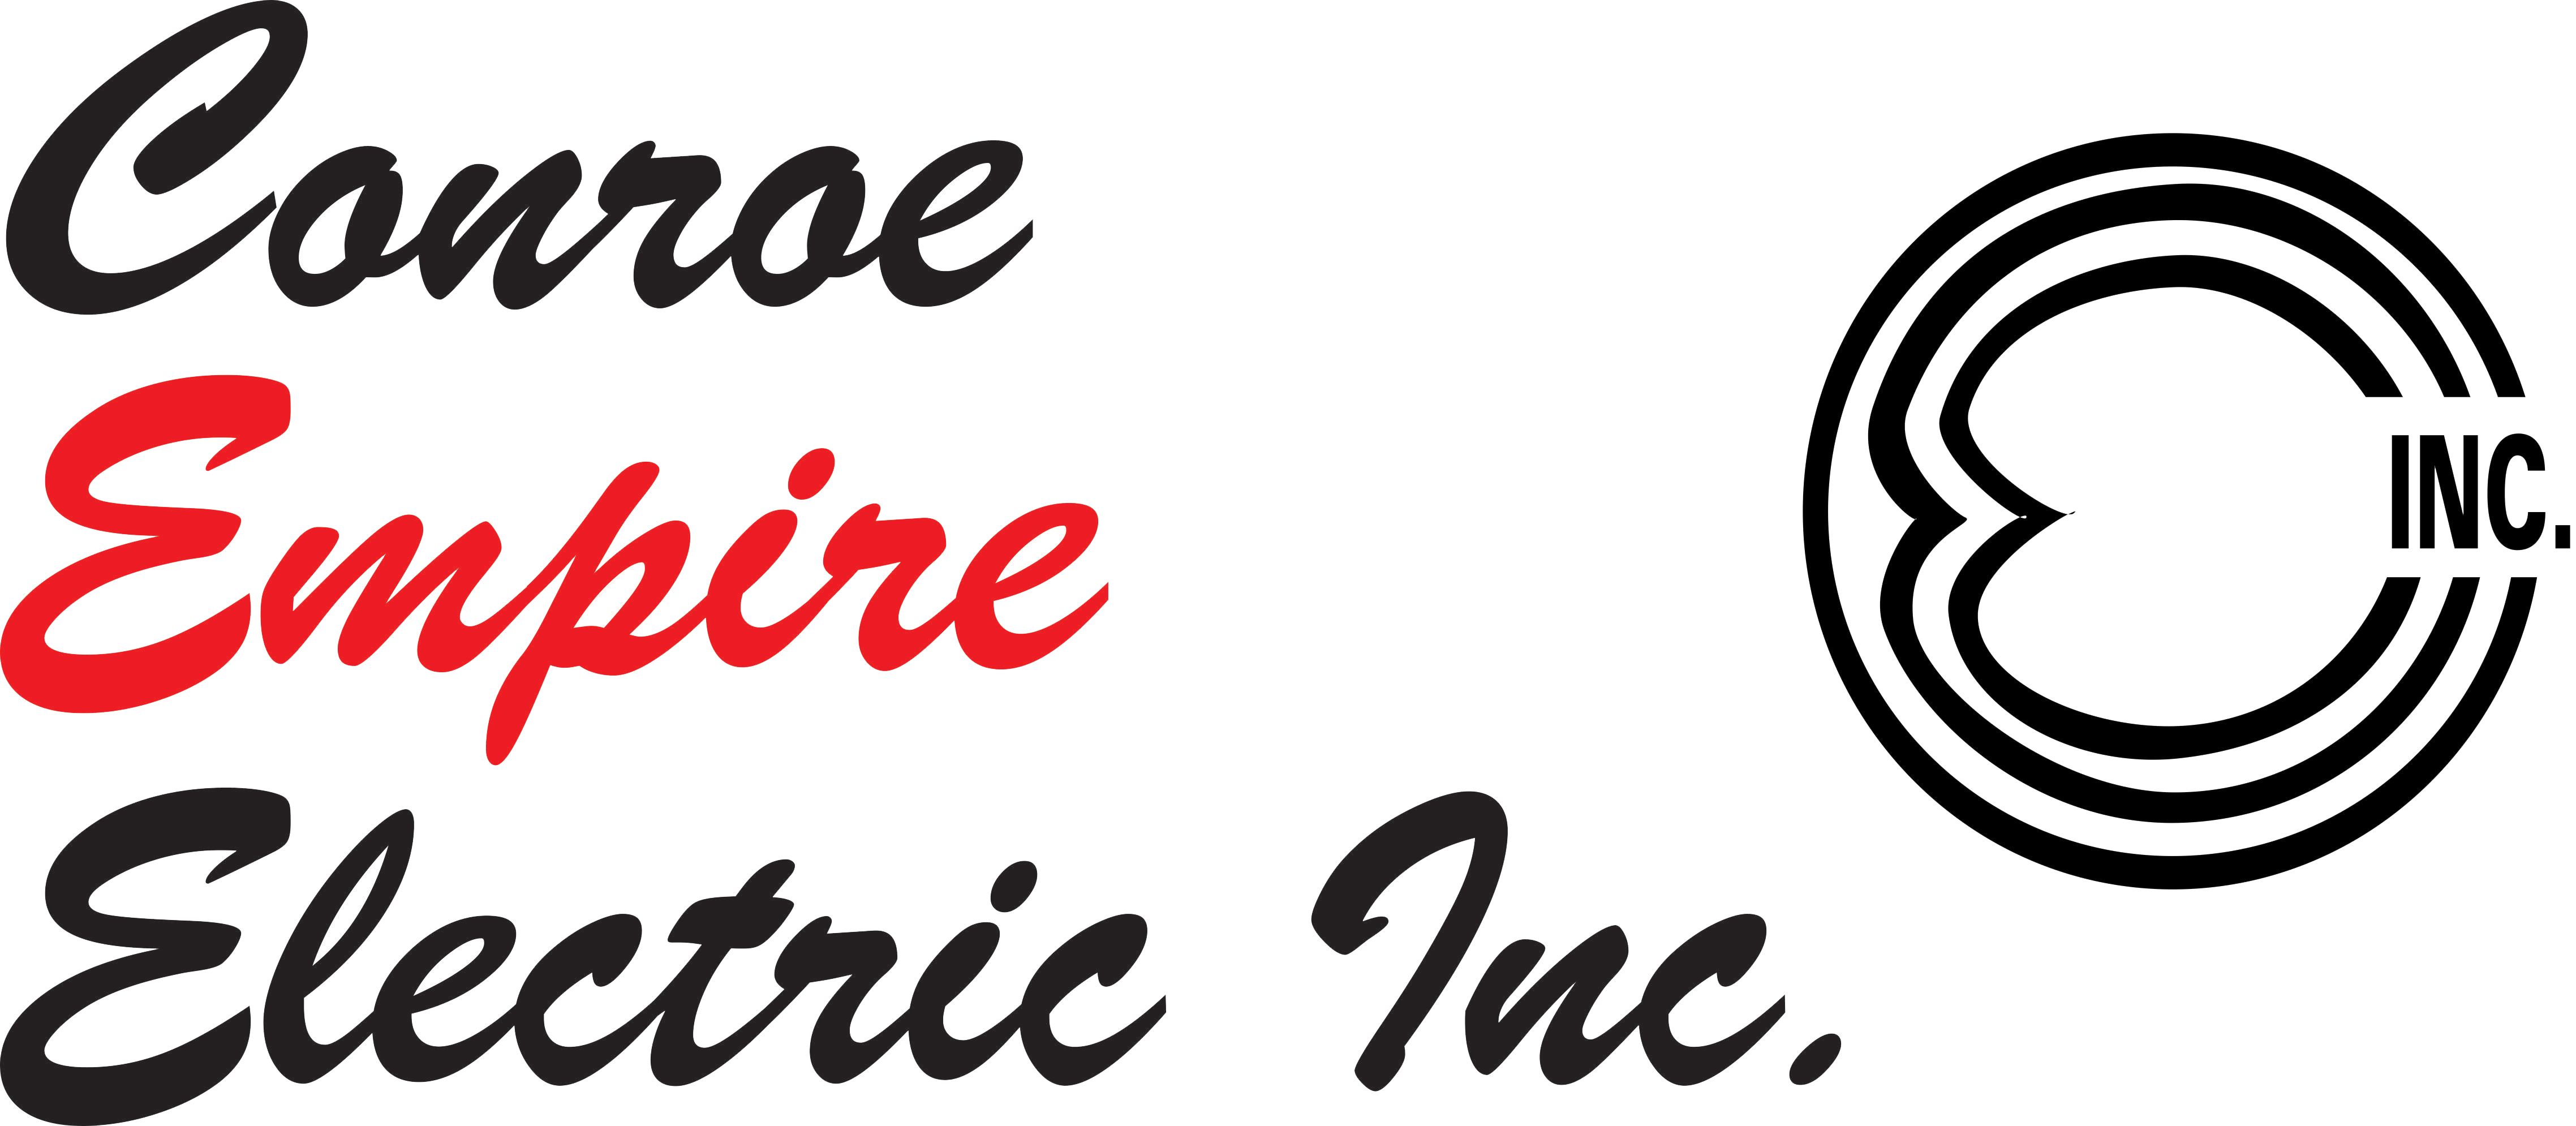 Conroe Empire Electric Inc.